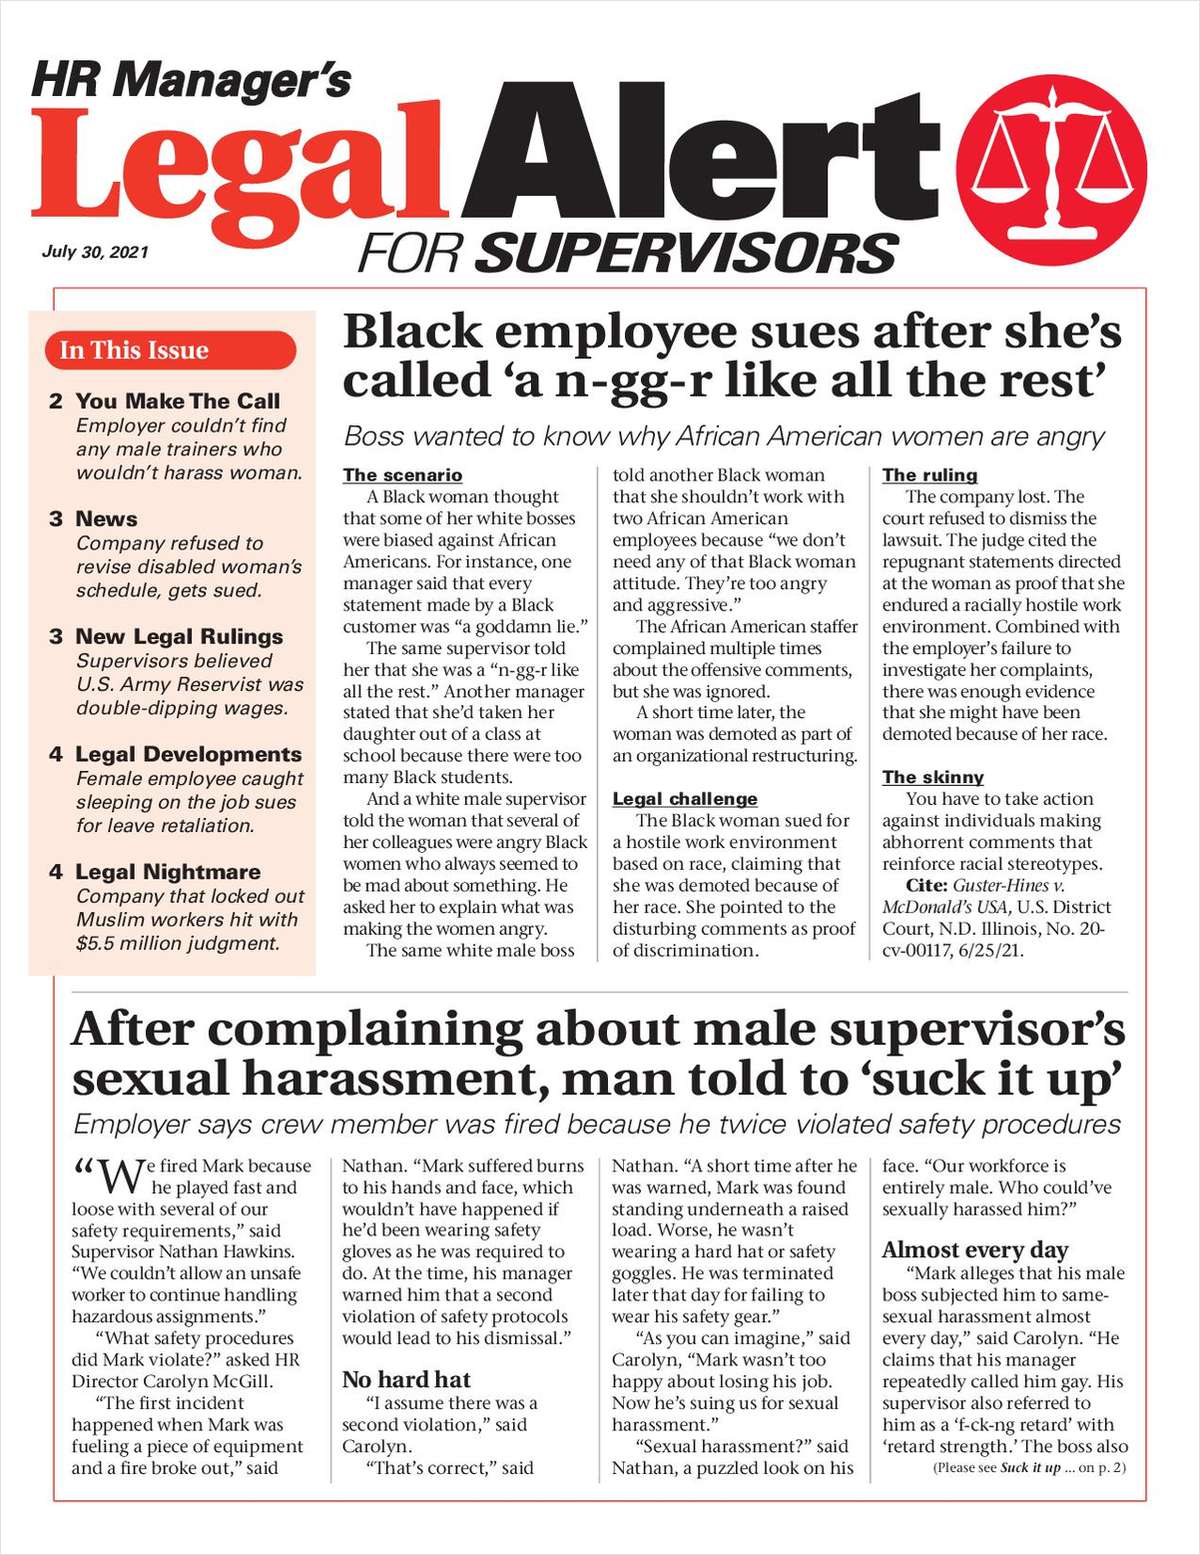 HR Manager's Legal Alert for Supervisors Newsletter: July 30 Edition